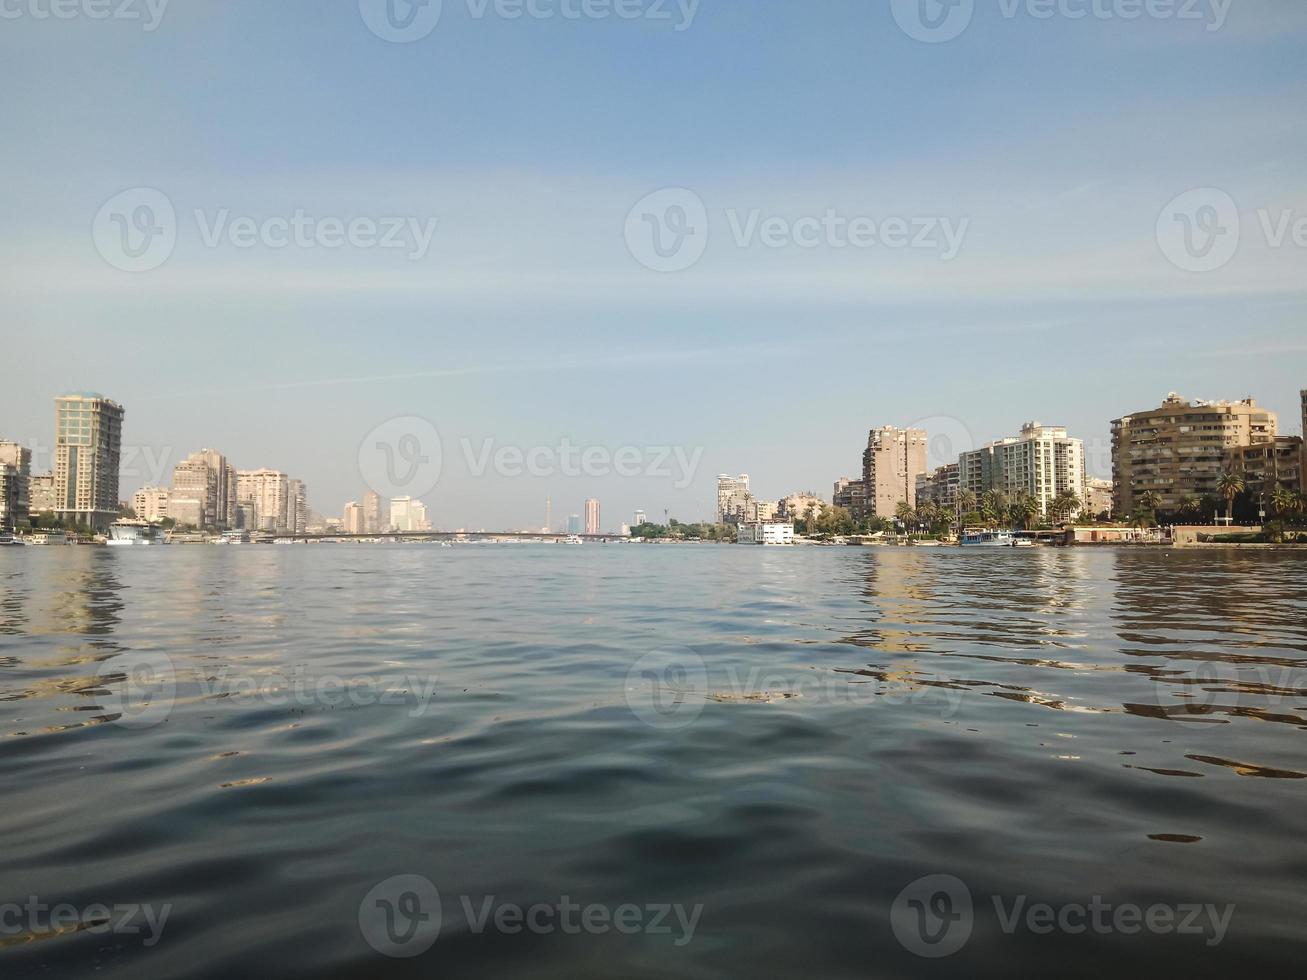 stora byggnader vid Nilen. Kairo City, Egypten foto